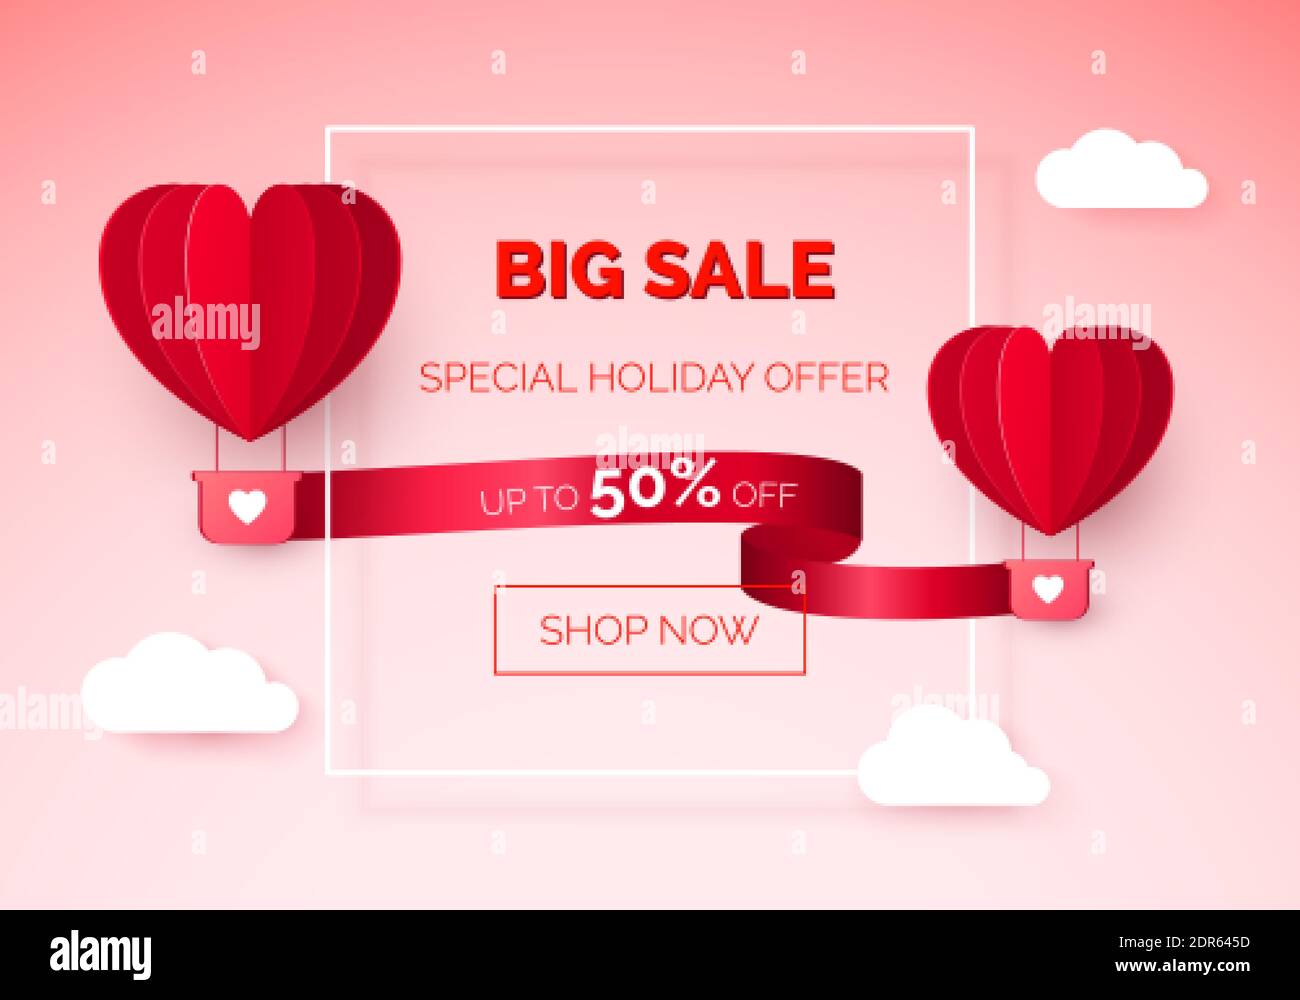 Saisonaler Verkauf am Valentinstag. Heißluftballons mit rotem Band und Rabatt-Angebot darauf. vektor-Illustration Stock Vektor